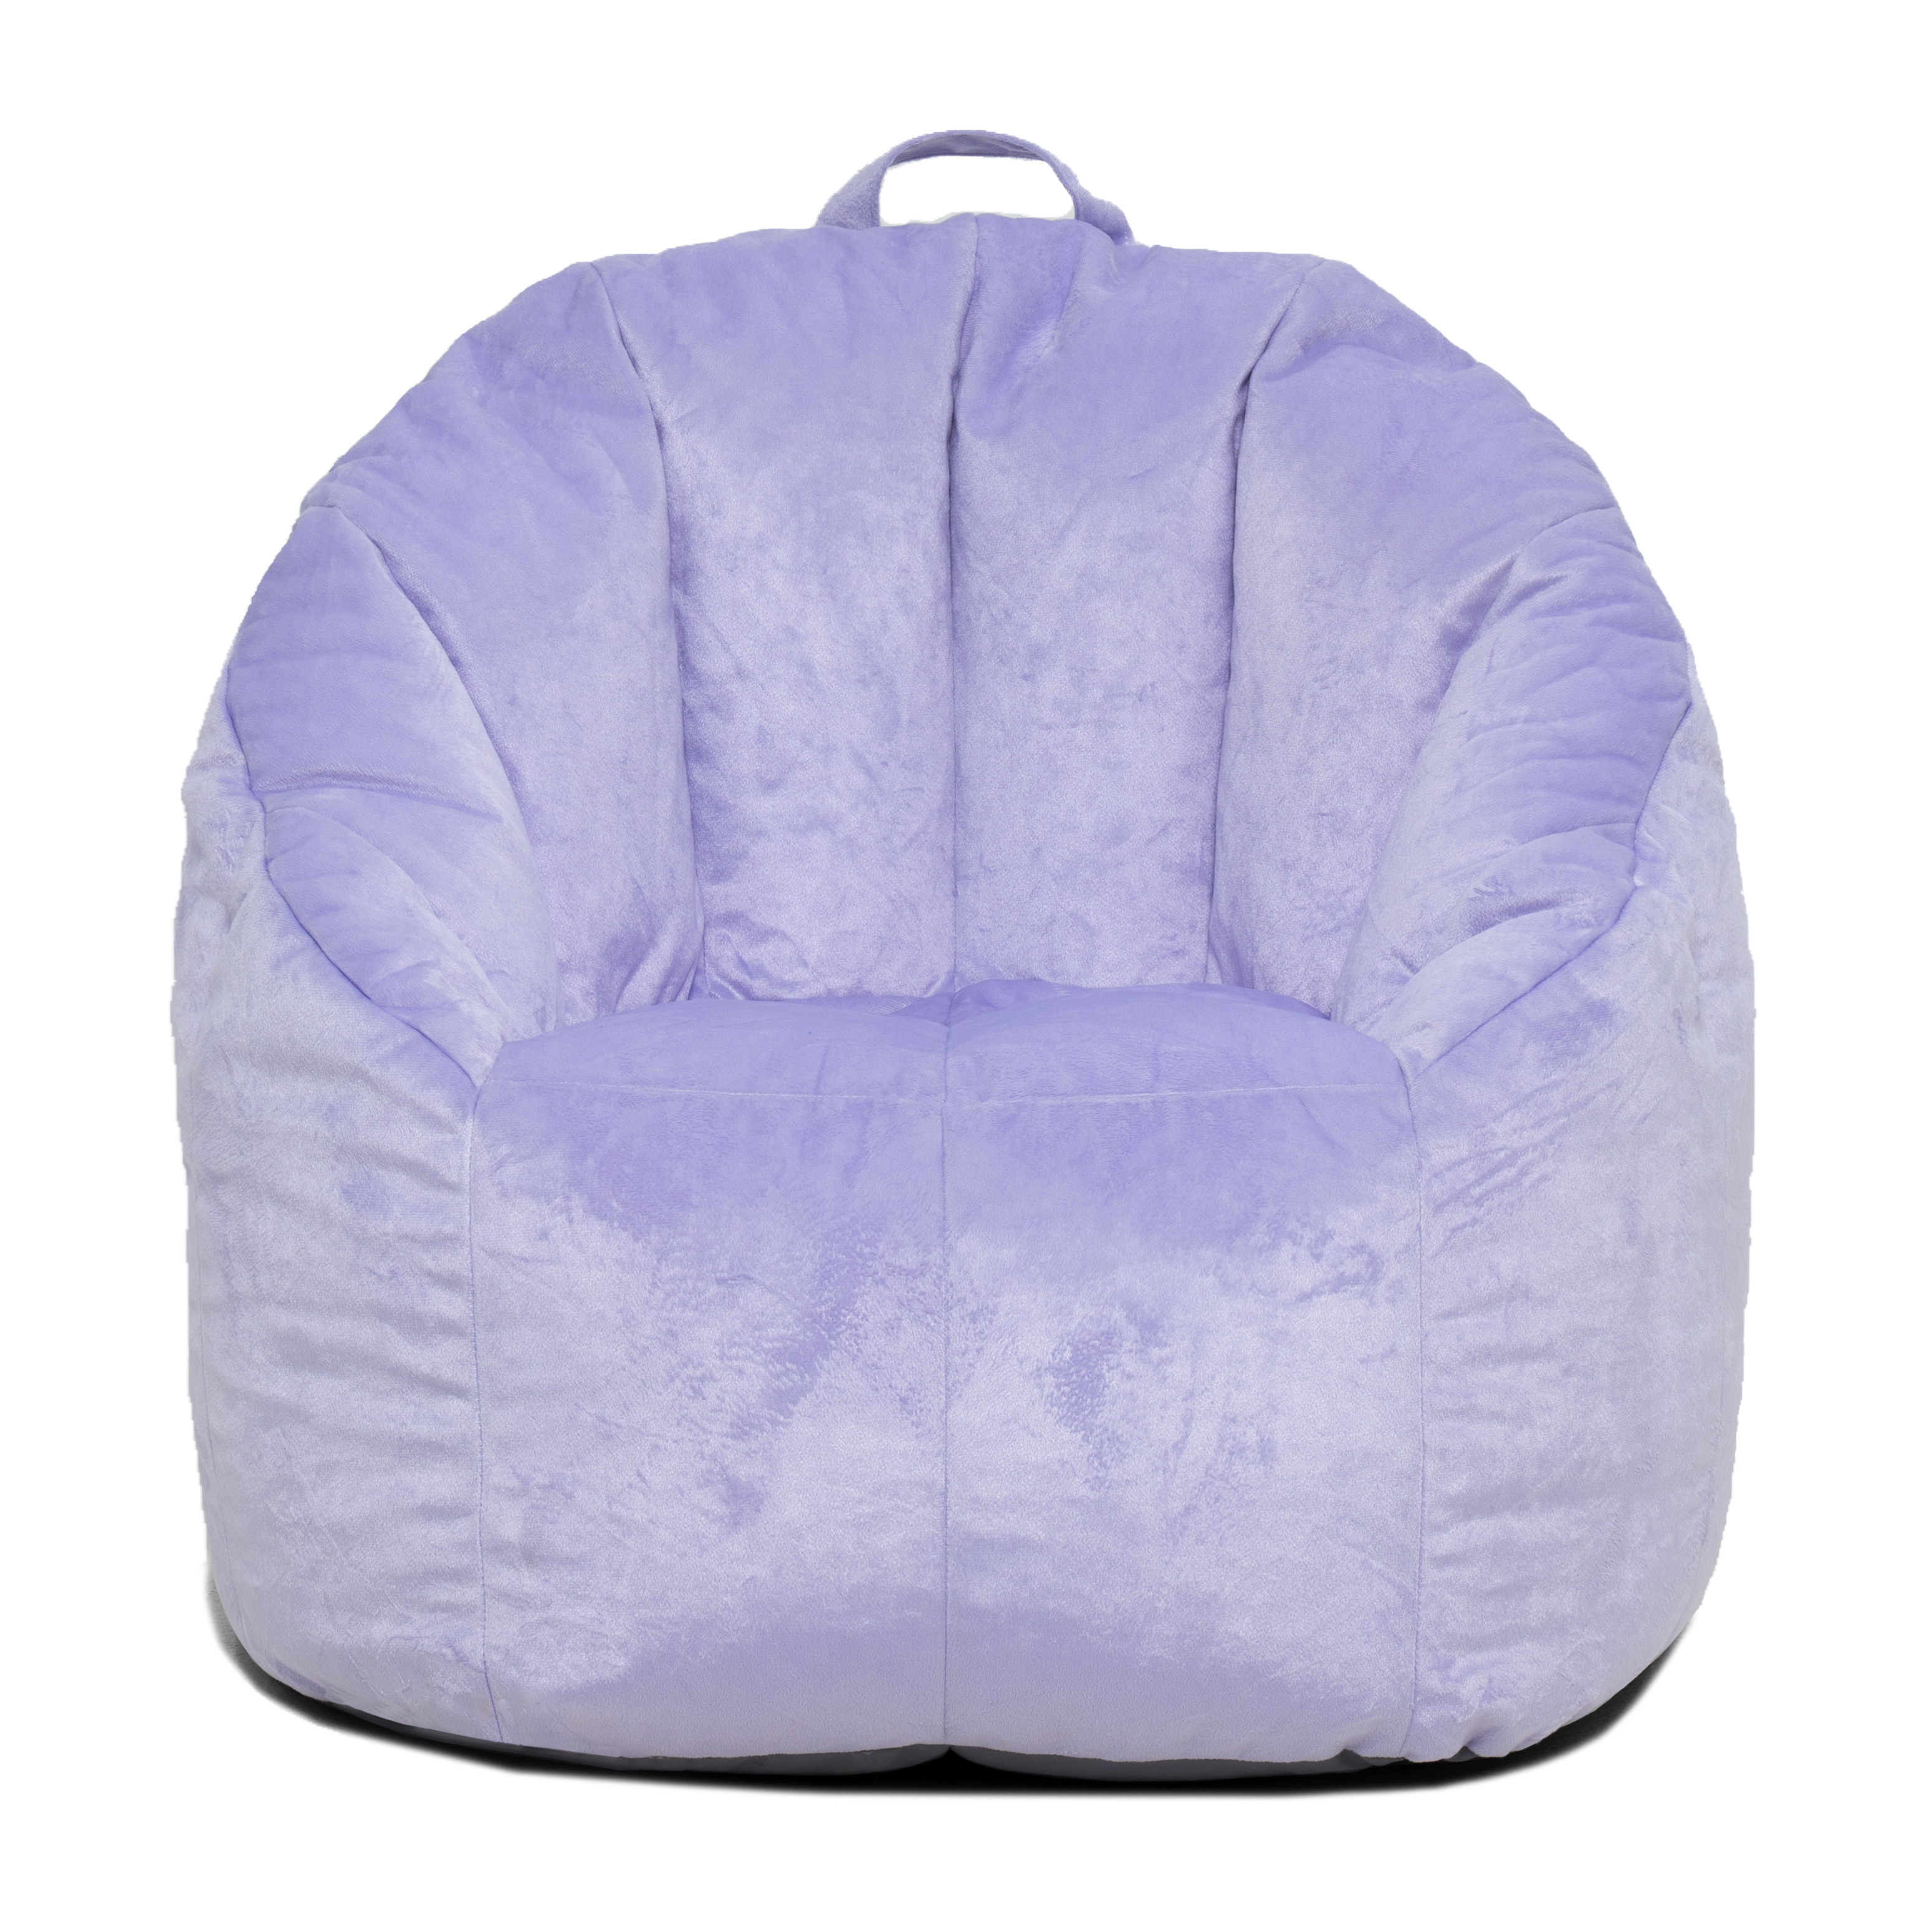 Big Joe Joey Bean Bag Chair, Plush, Kids and Teens, 2.5ft, Purple - image 1 of 6